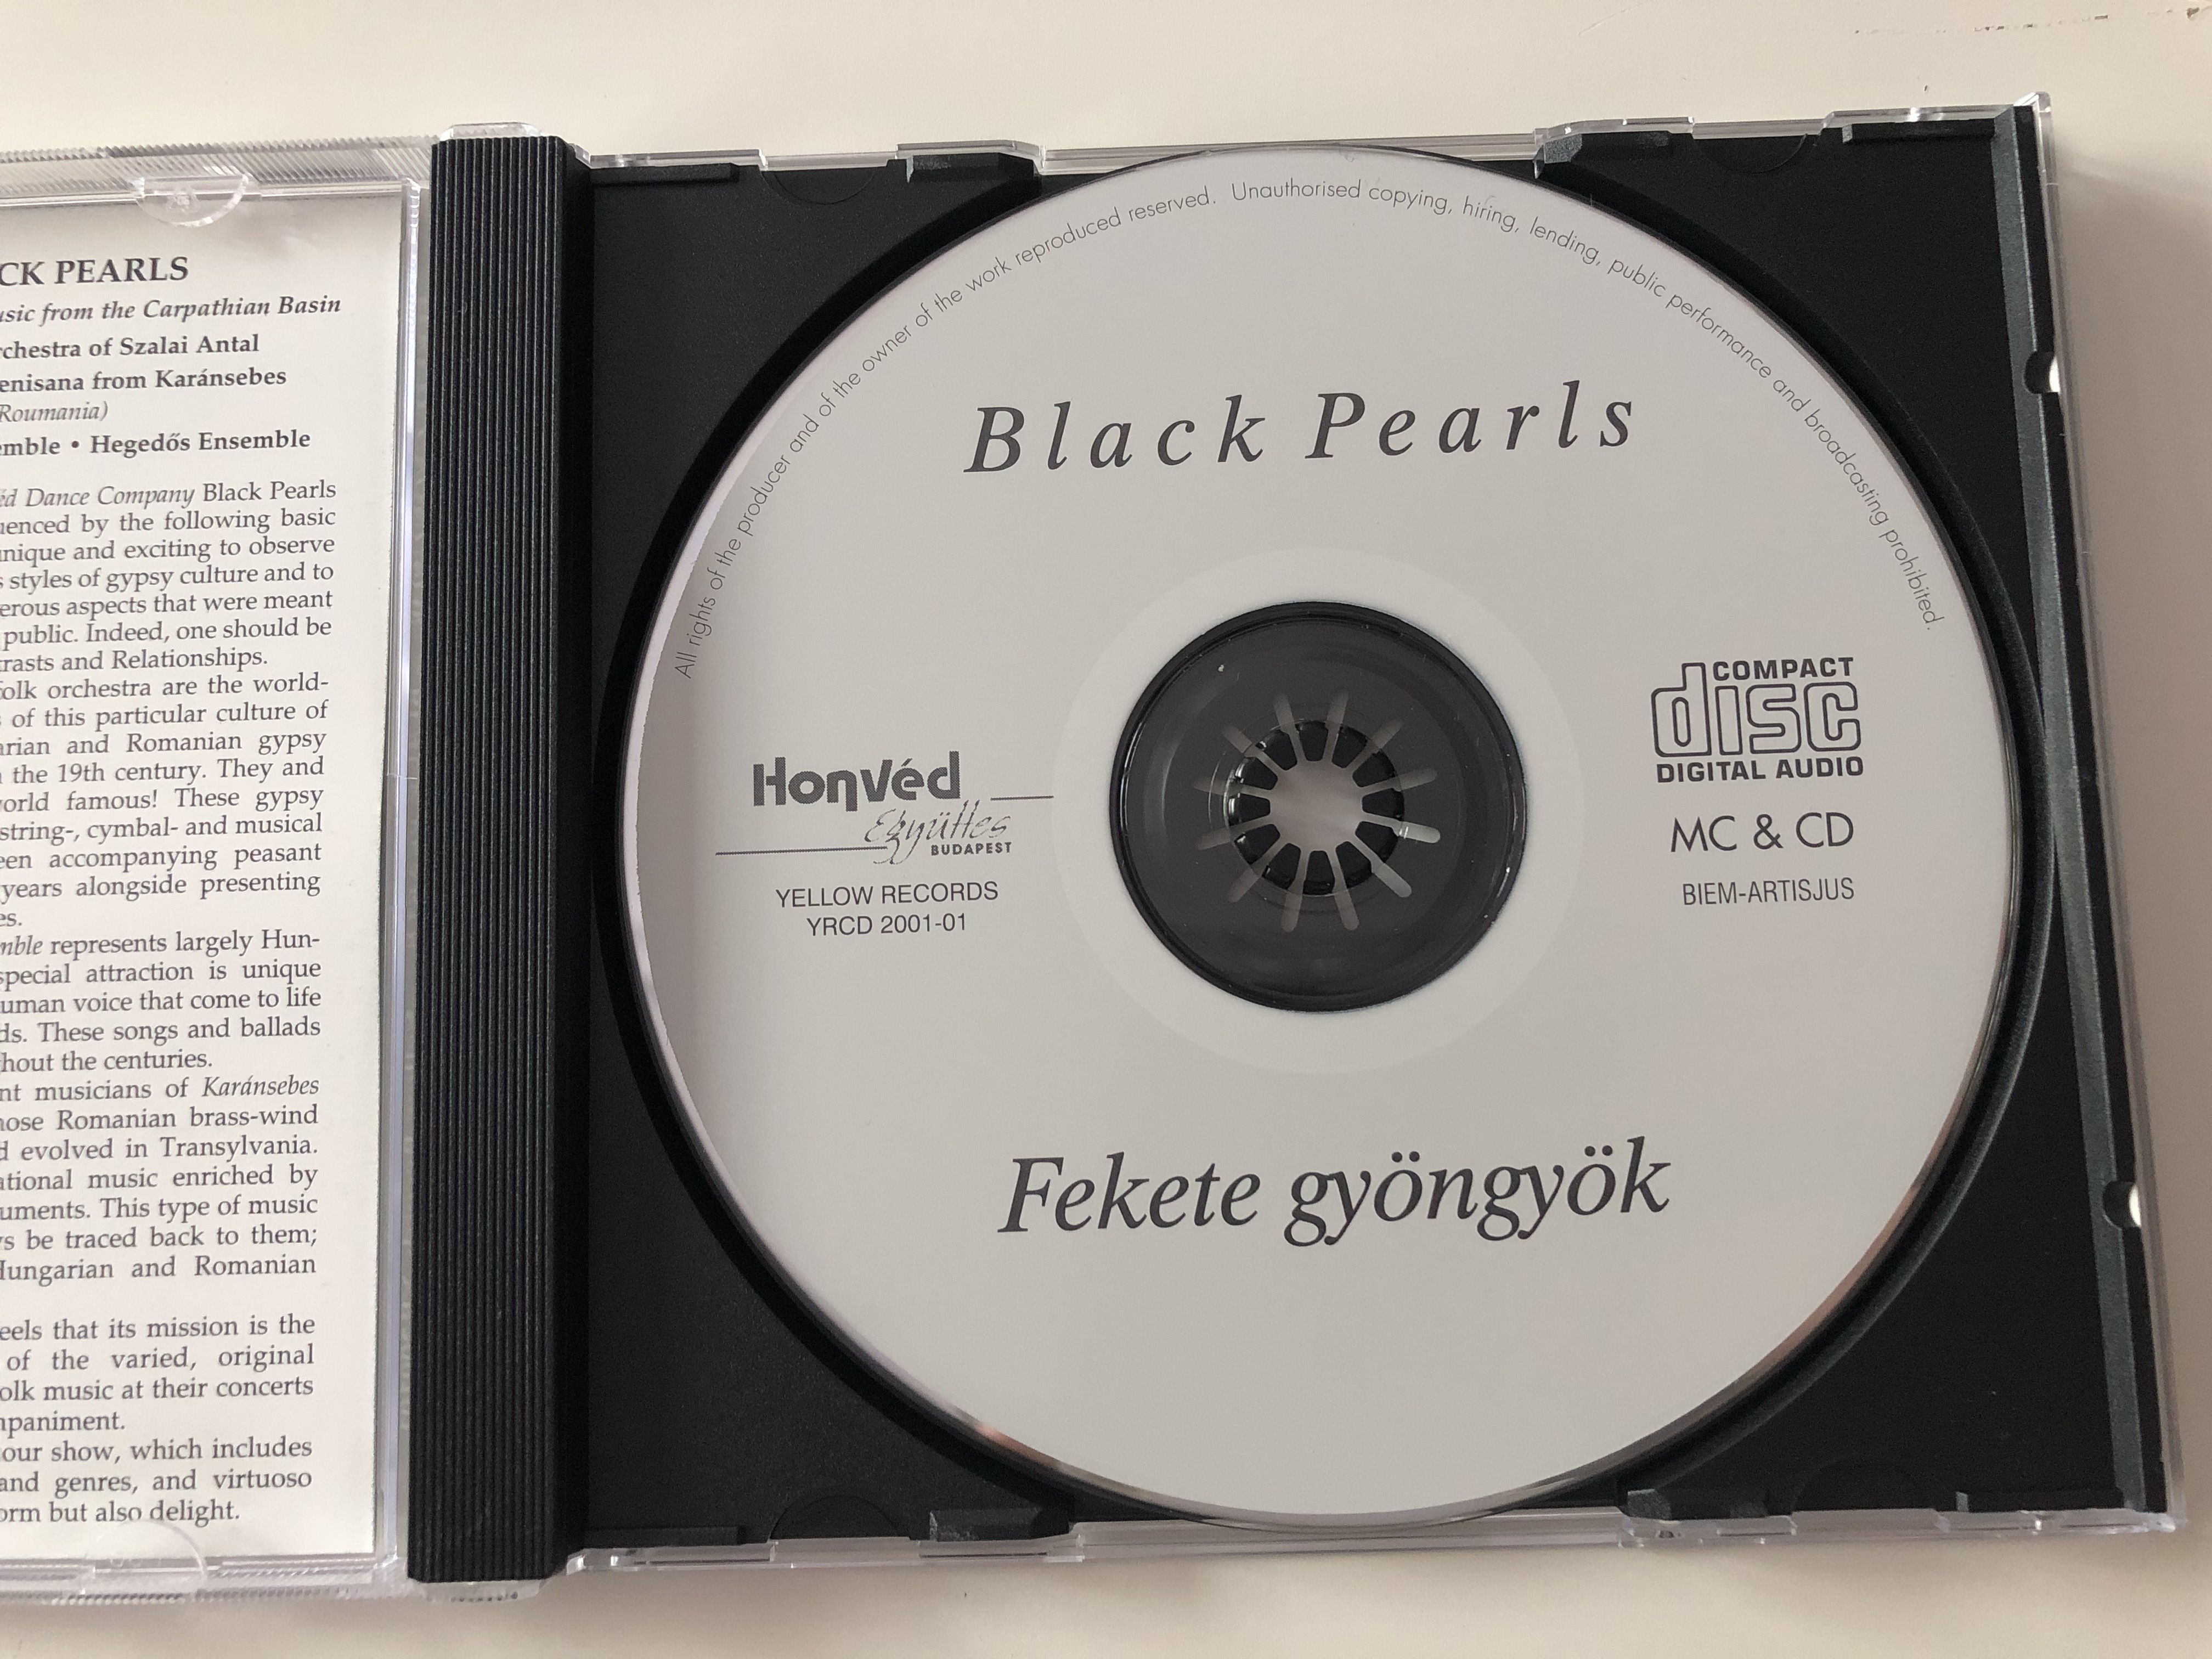 fekete-gy-ngy-k-black-pearls-honv-d-egy-ttes-audio-cd-2001-yrcd-2001-01-3-.jpg